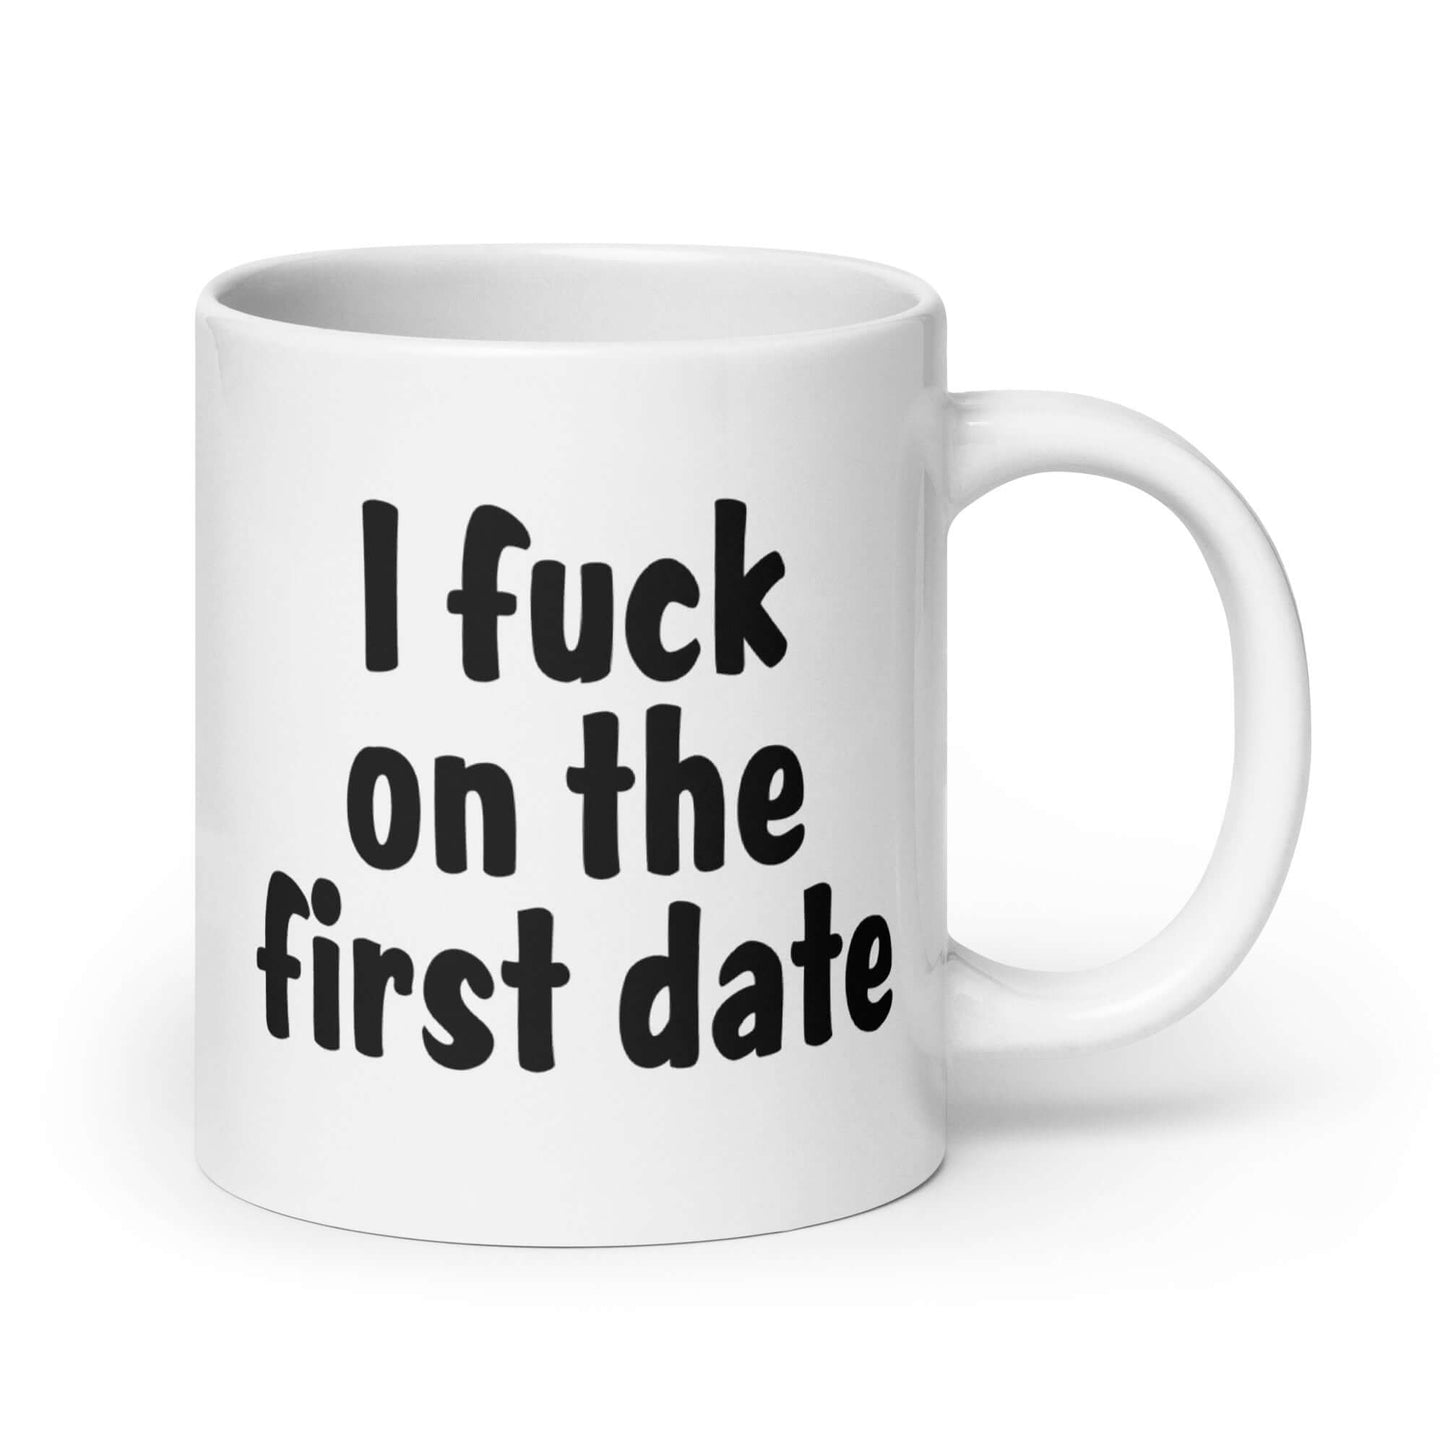 I fuck on the first date crude humor mug